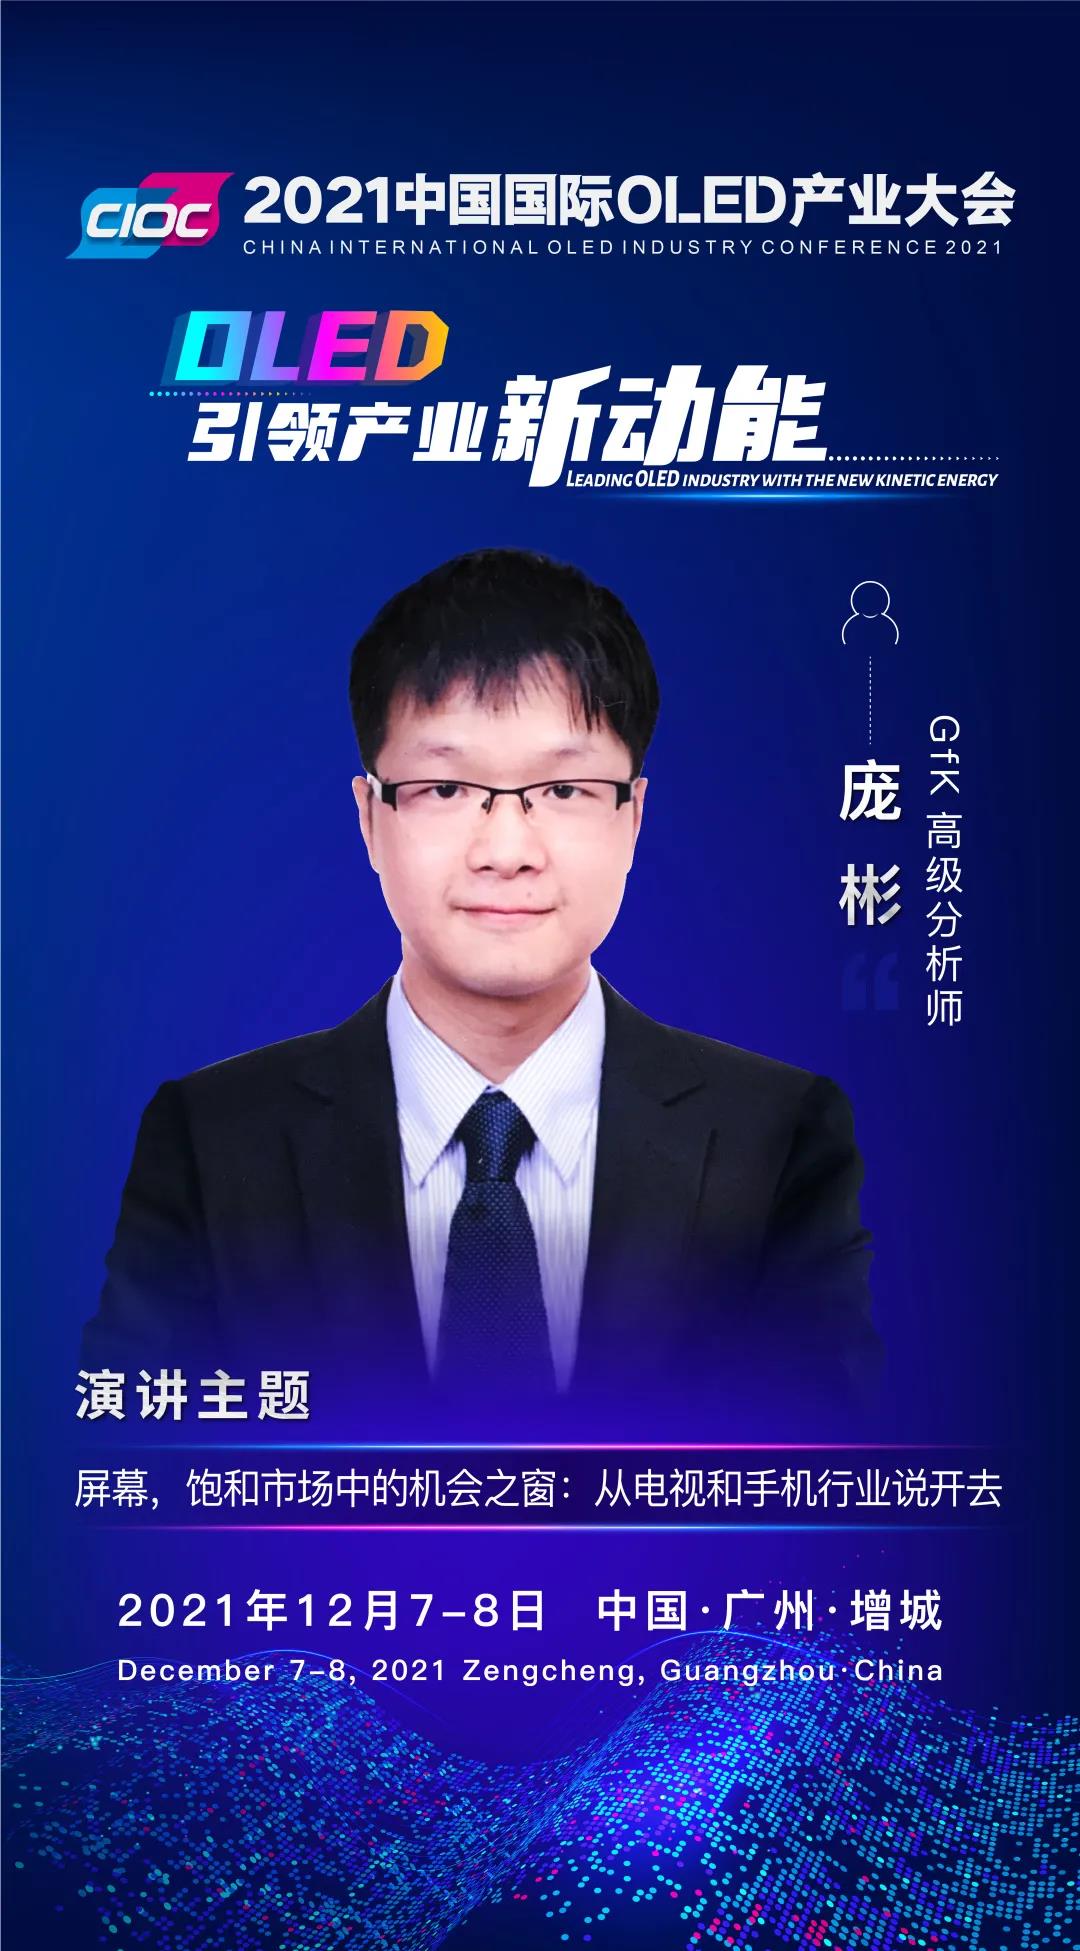 OLED大咖SHOW | GfK高级分析师庞彬受邀出席2021中国国际OLED产业大会并发表主题演讲